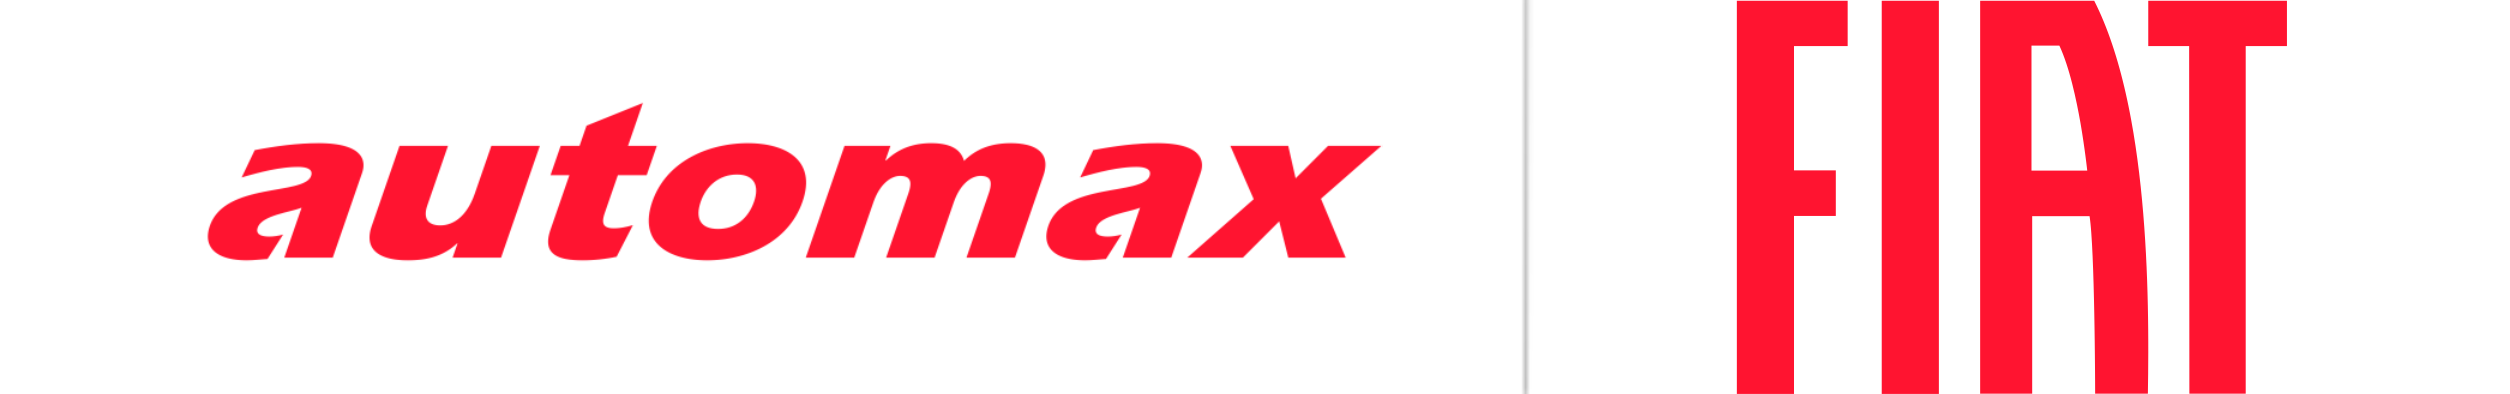 pic-logo-automax-fiat